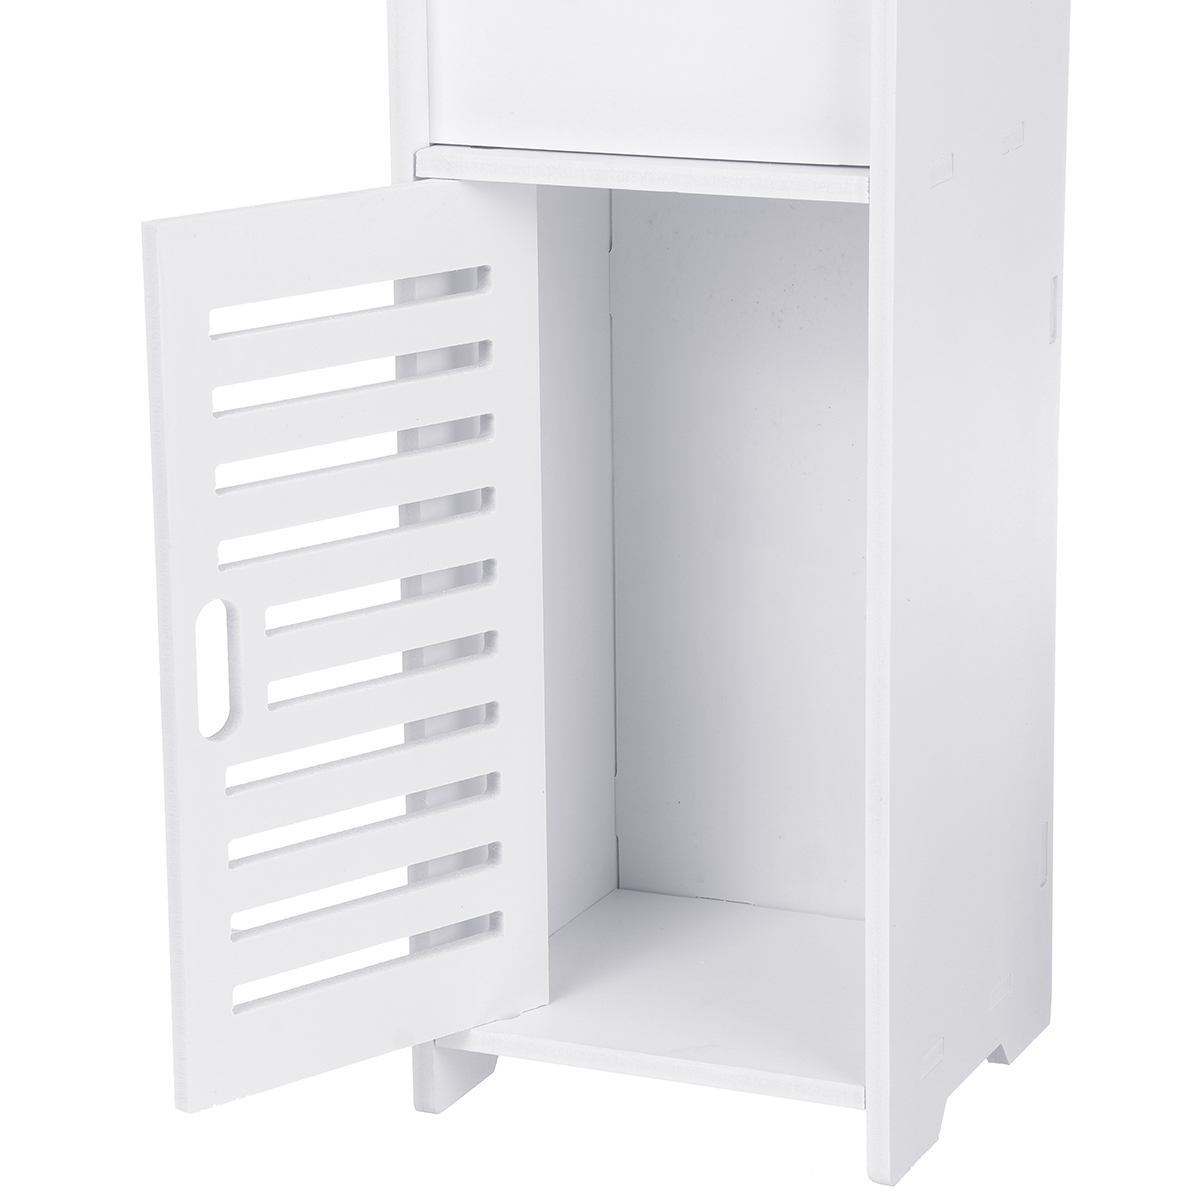 Small-Bathroom-Toilet-Storage-Cabinet-Waterproof-Organizer-Standing-Rack-Shelf-1779556-11